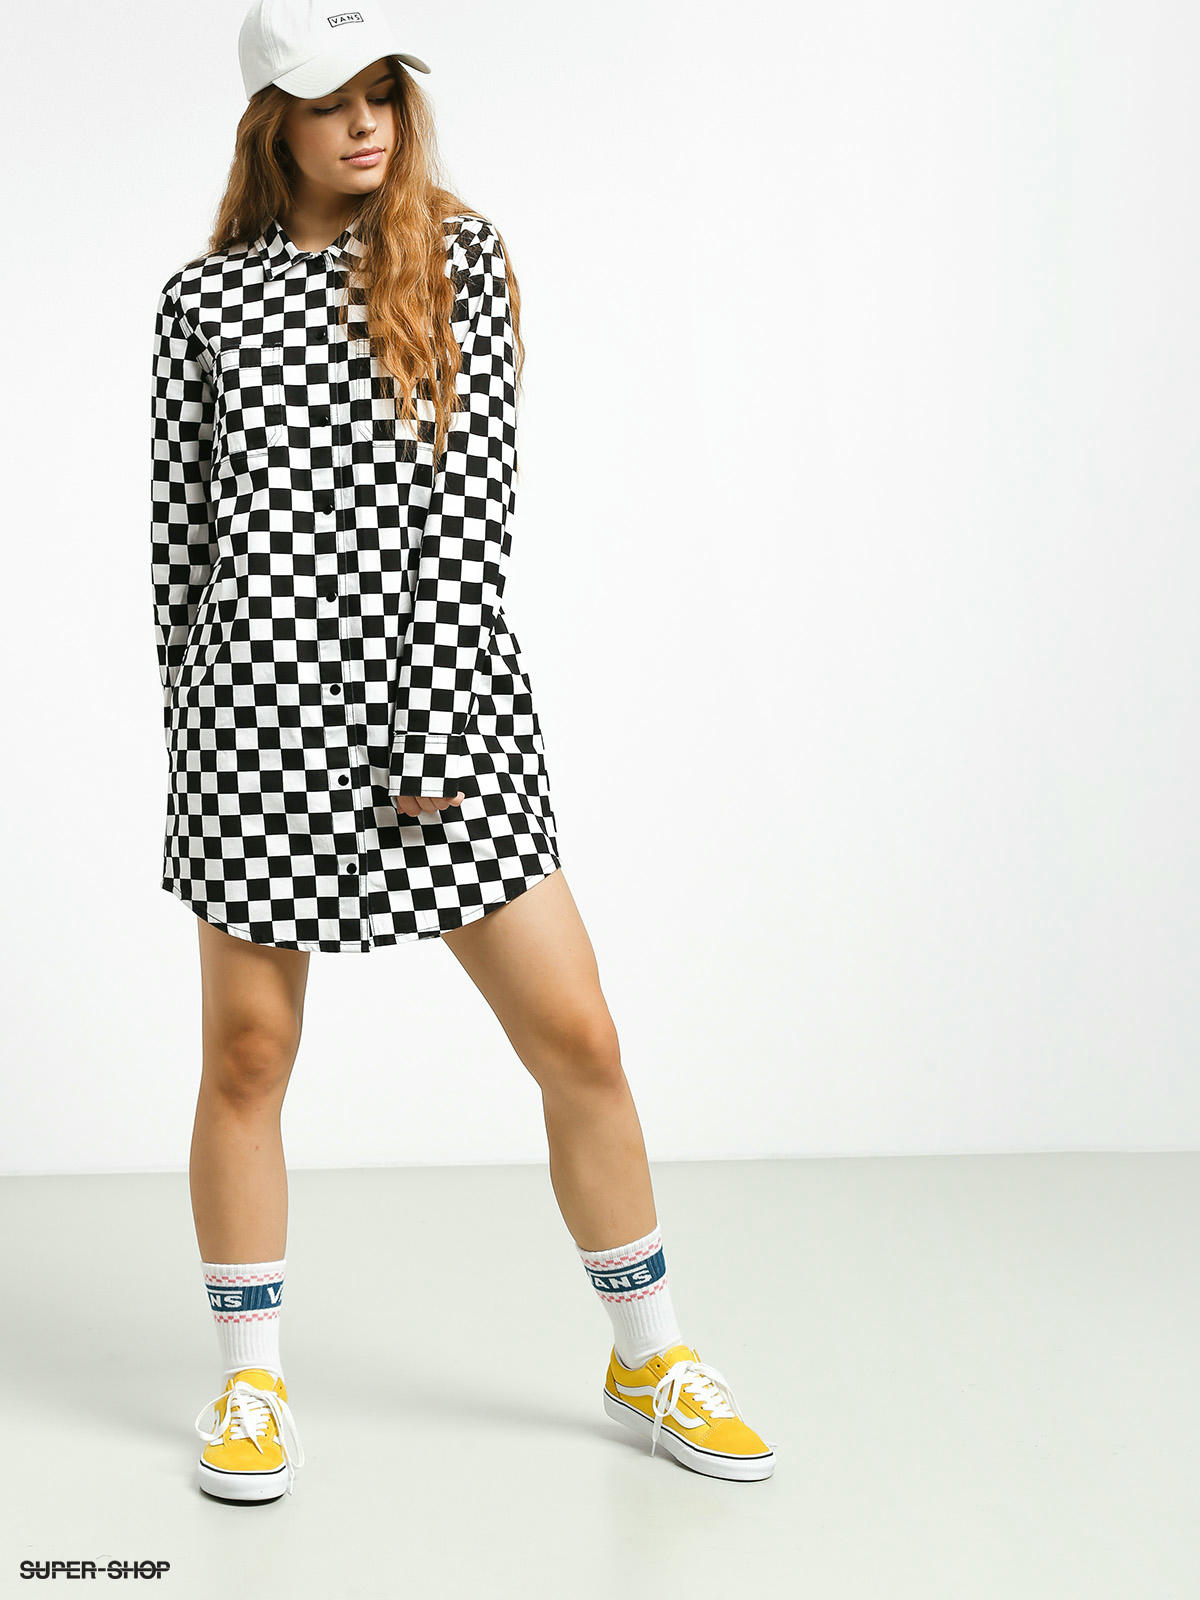 vans checkerboard dress